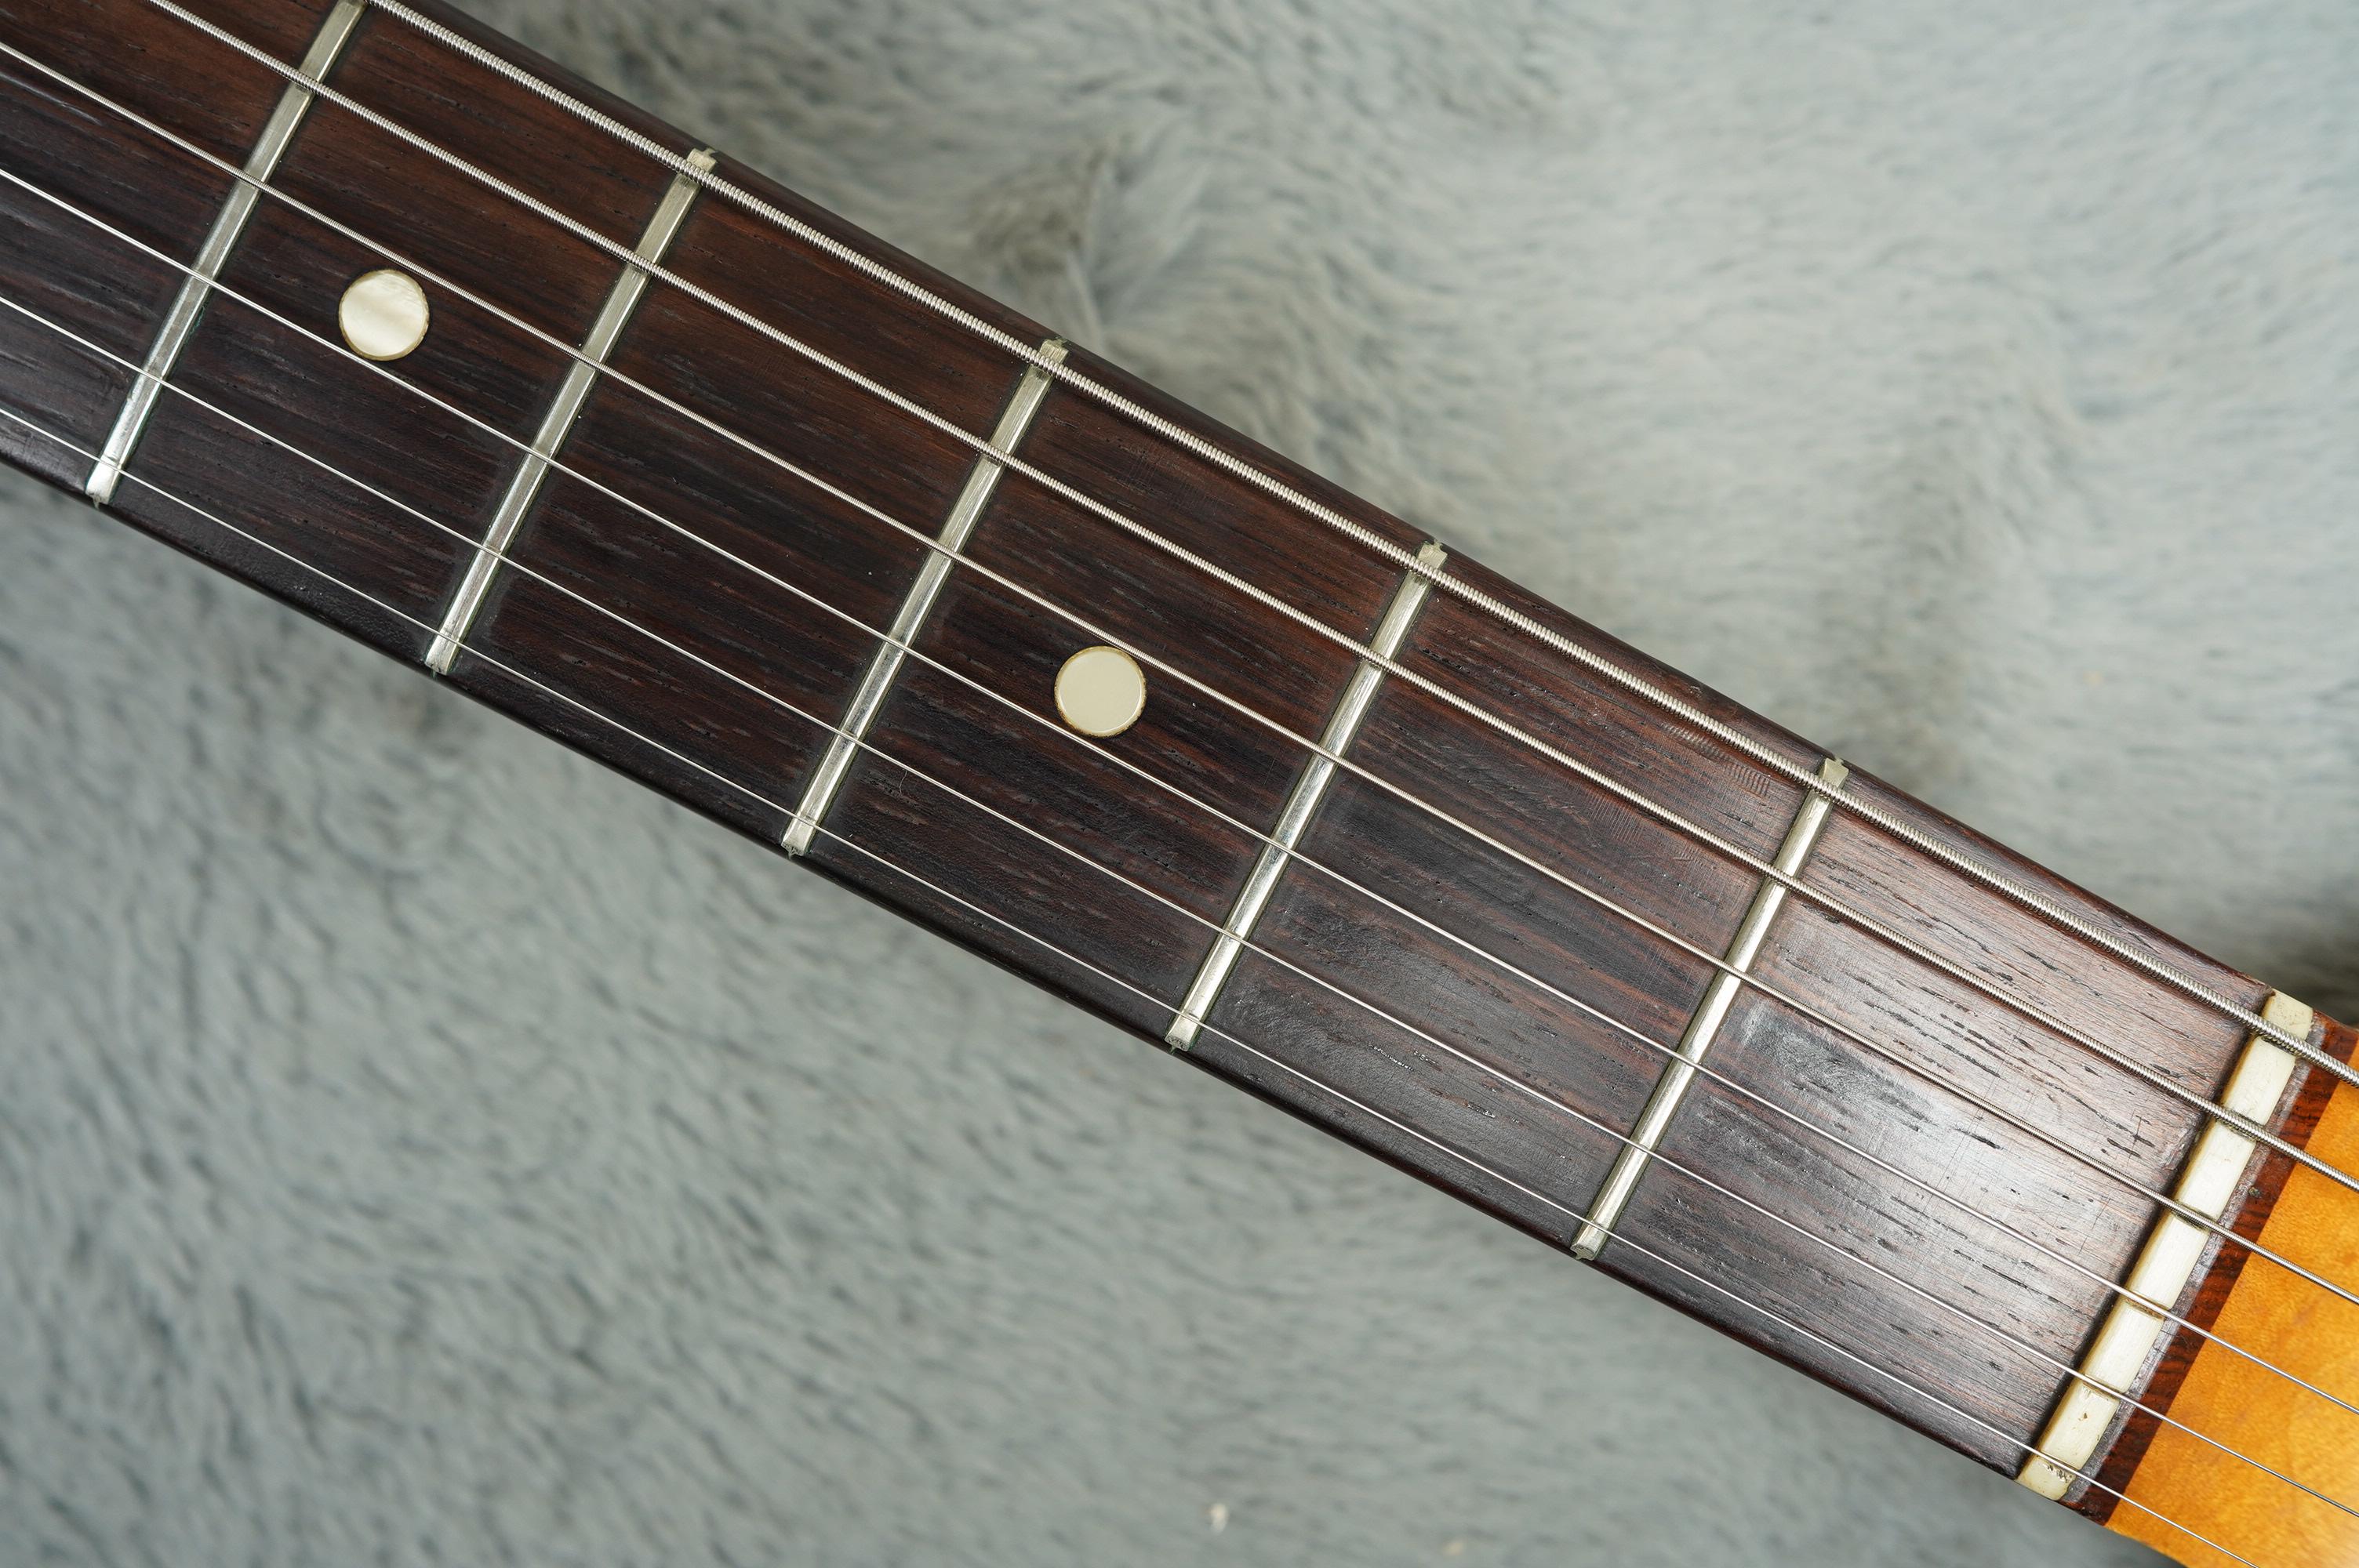 1965 Fender Stratocaster Factory Black